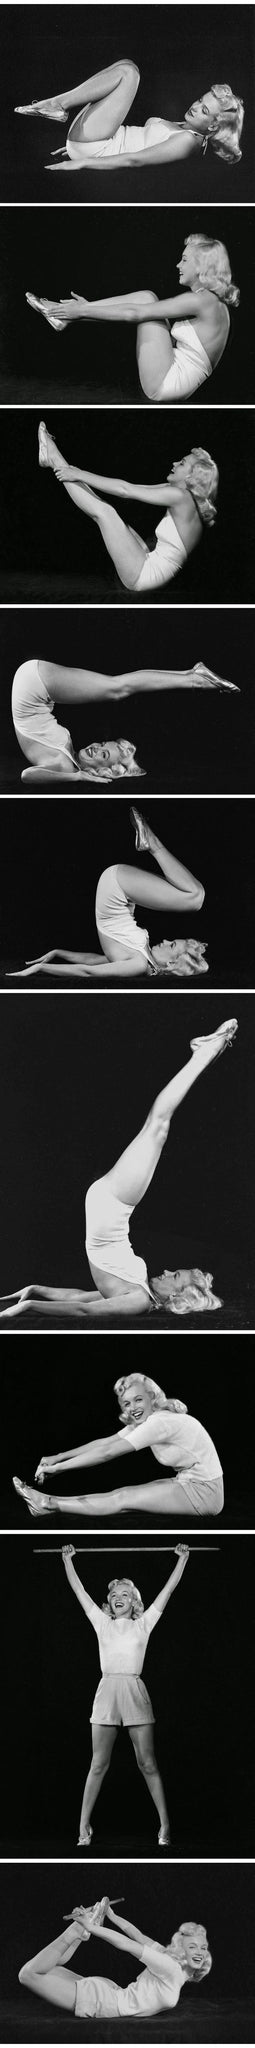 Marilyn Monroe Yoga